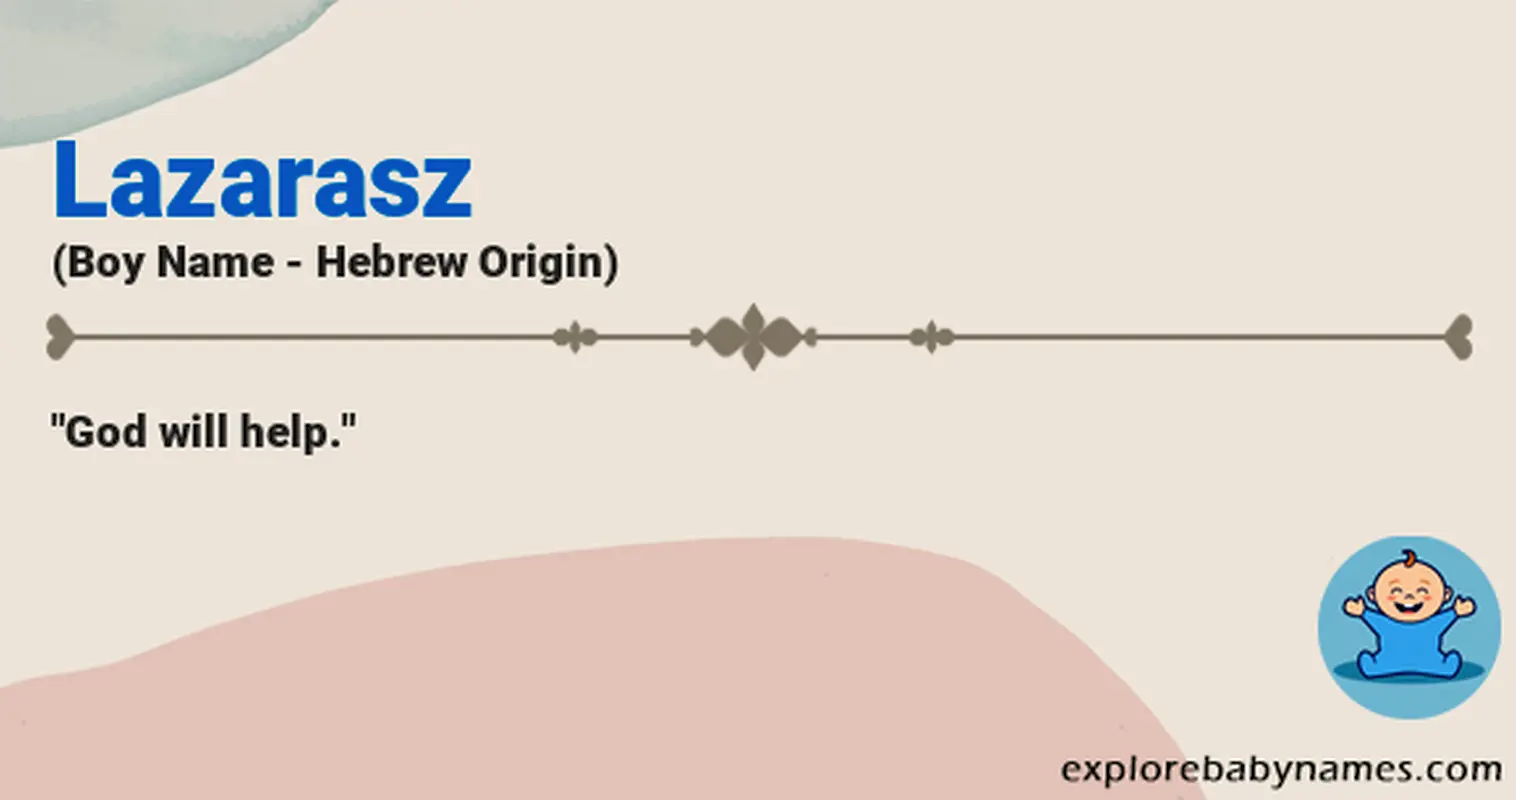 Meaning of Lazarasz